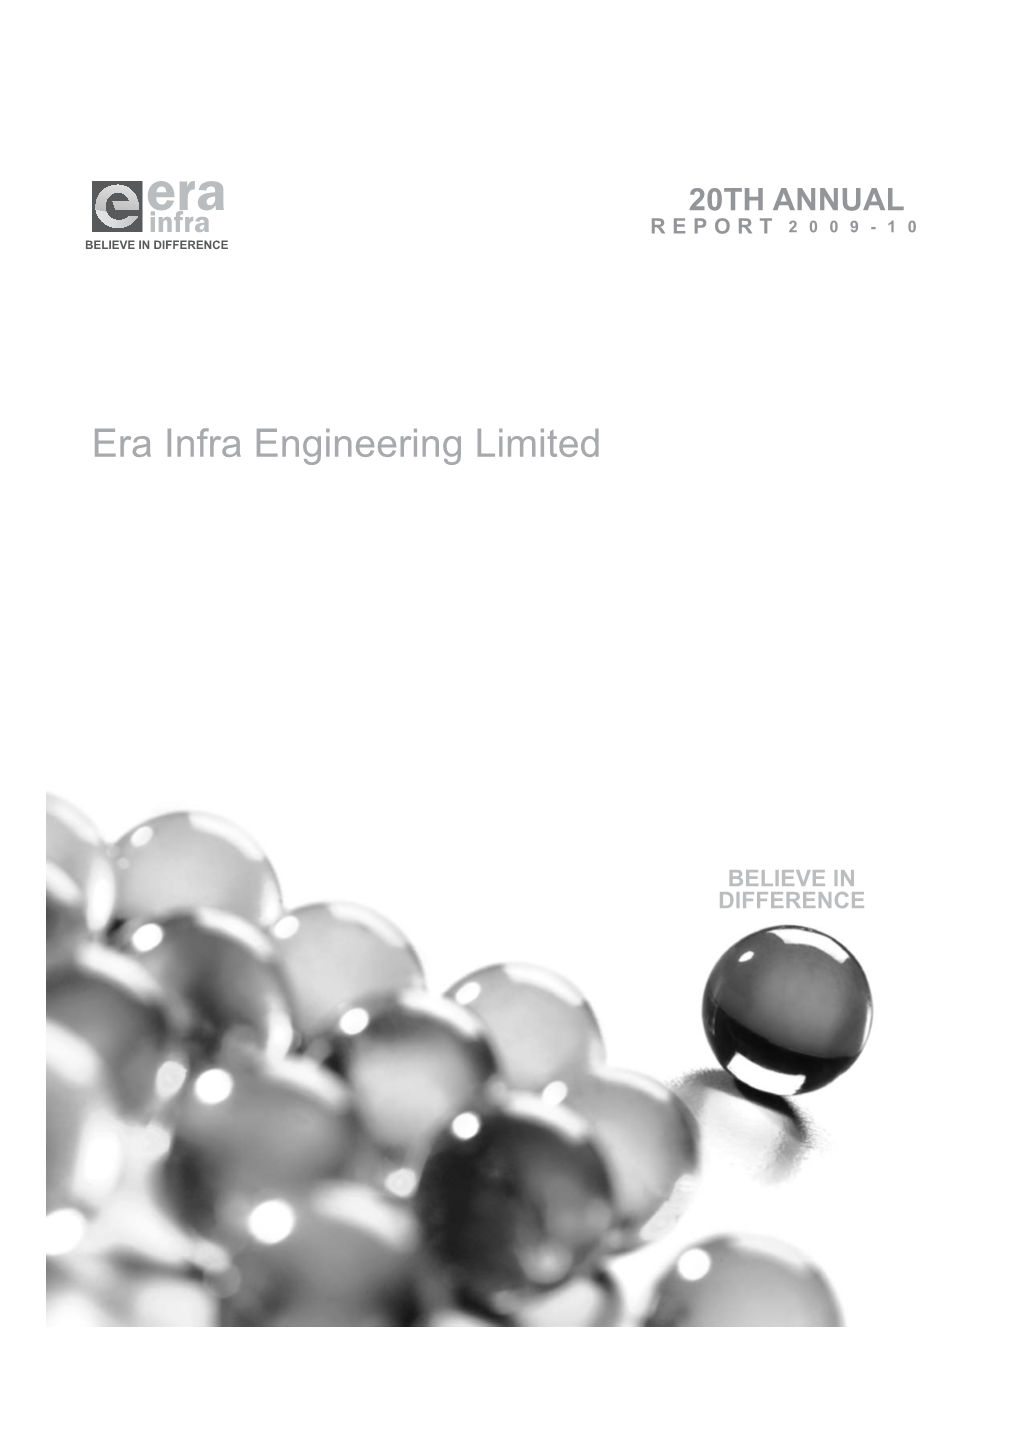 Era Infra Engineering Limited